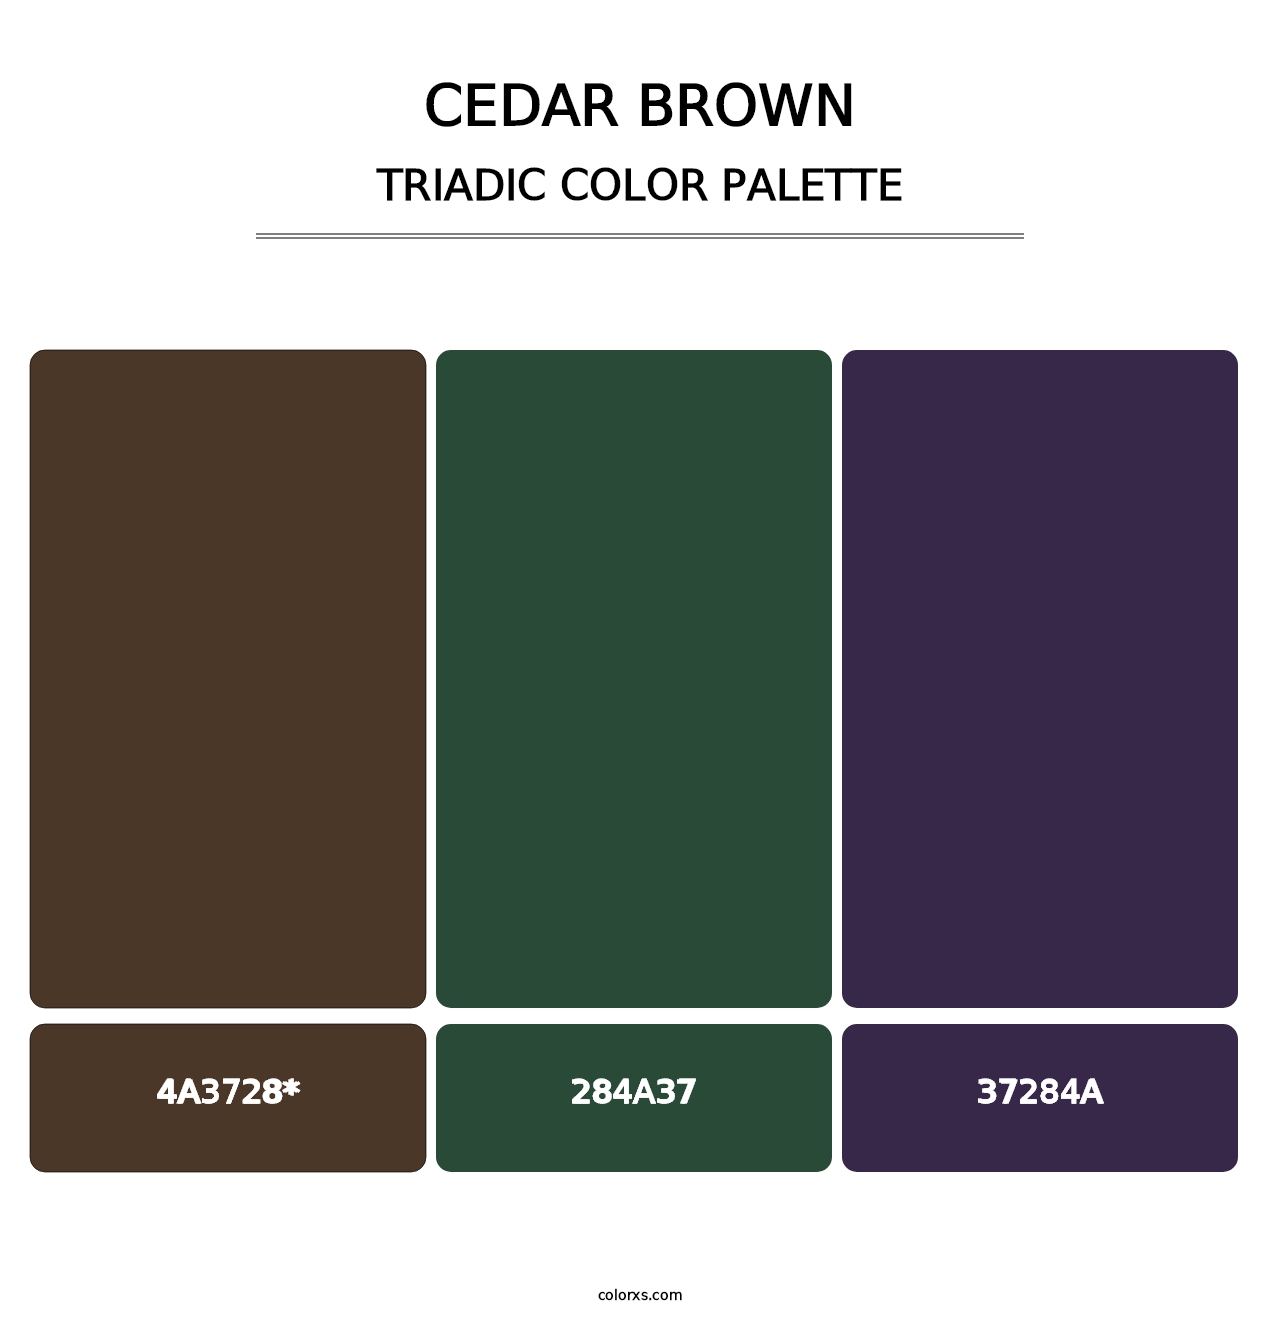 Cedar Brown - Triadic Color Palette